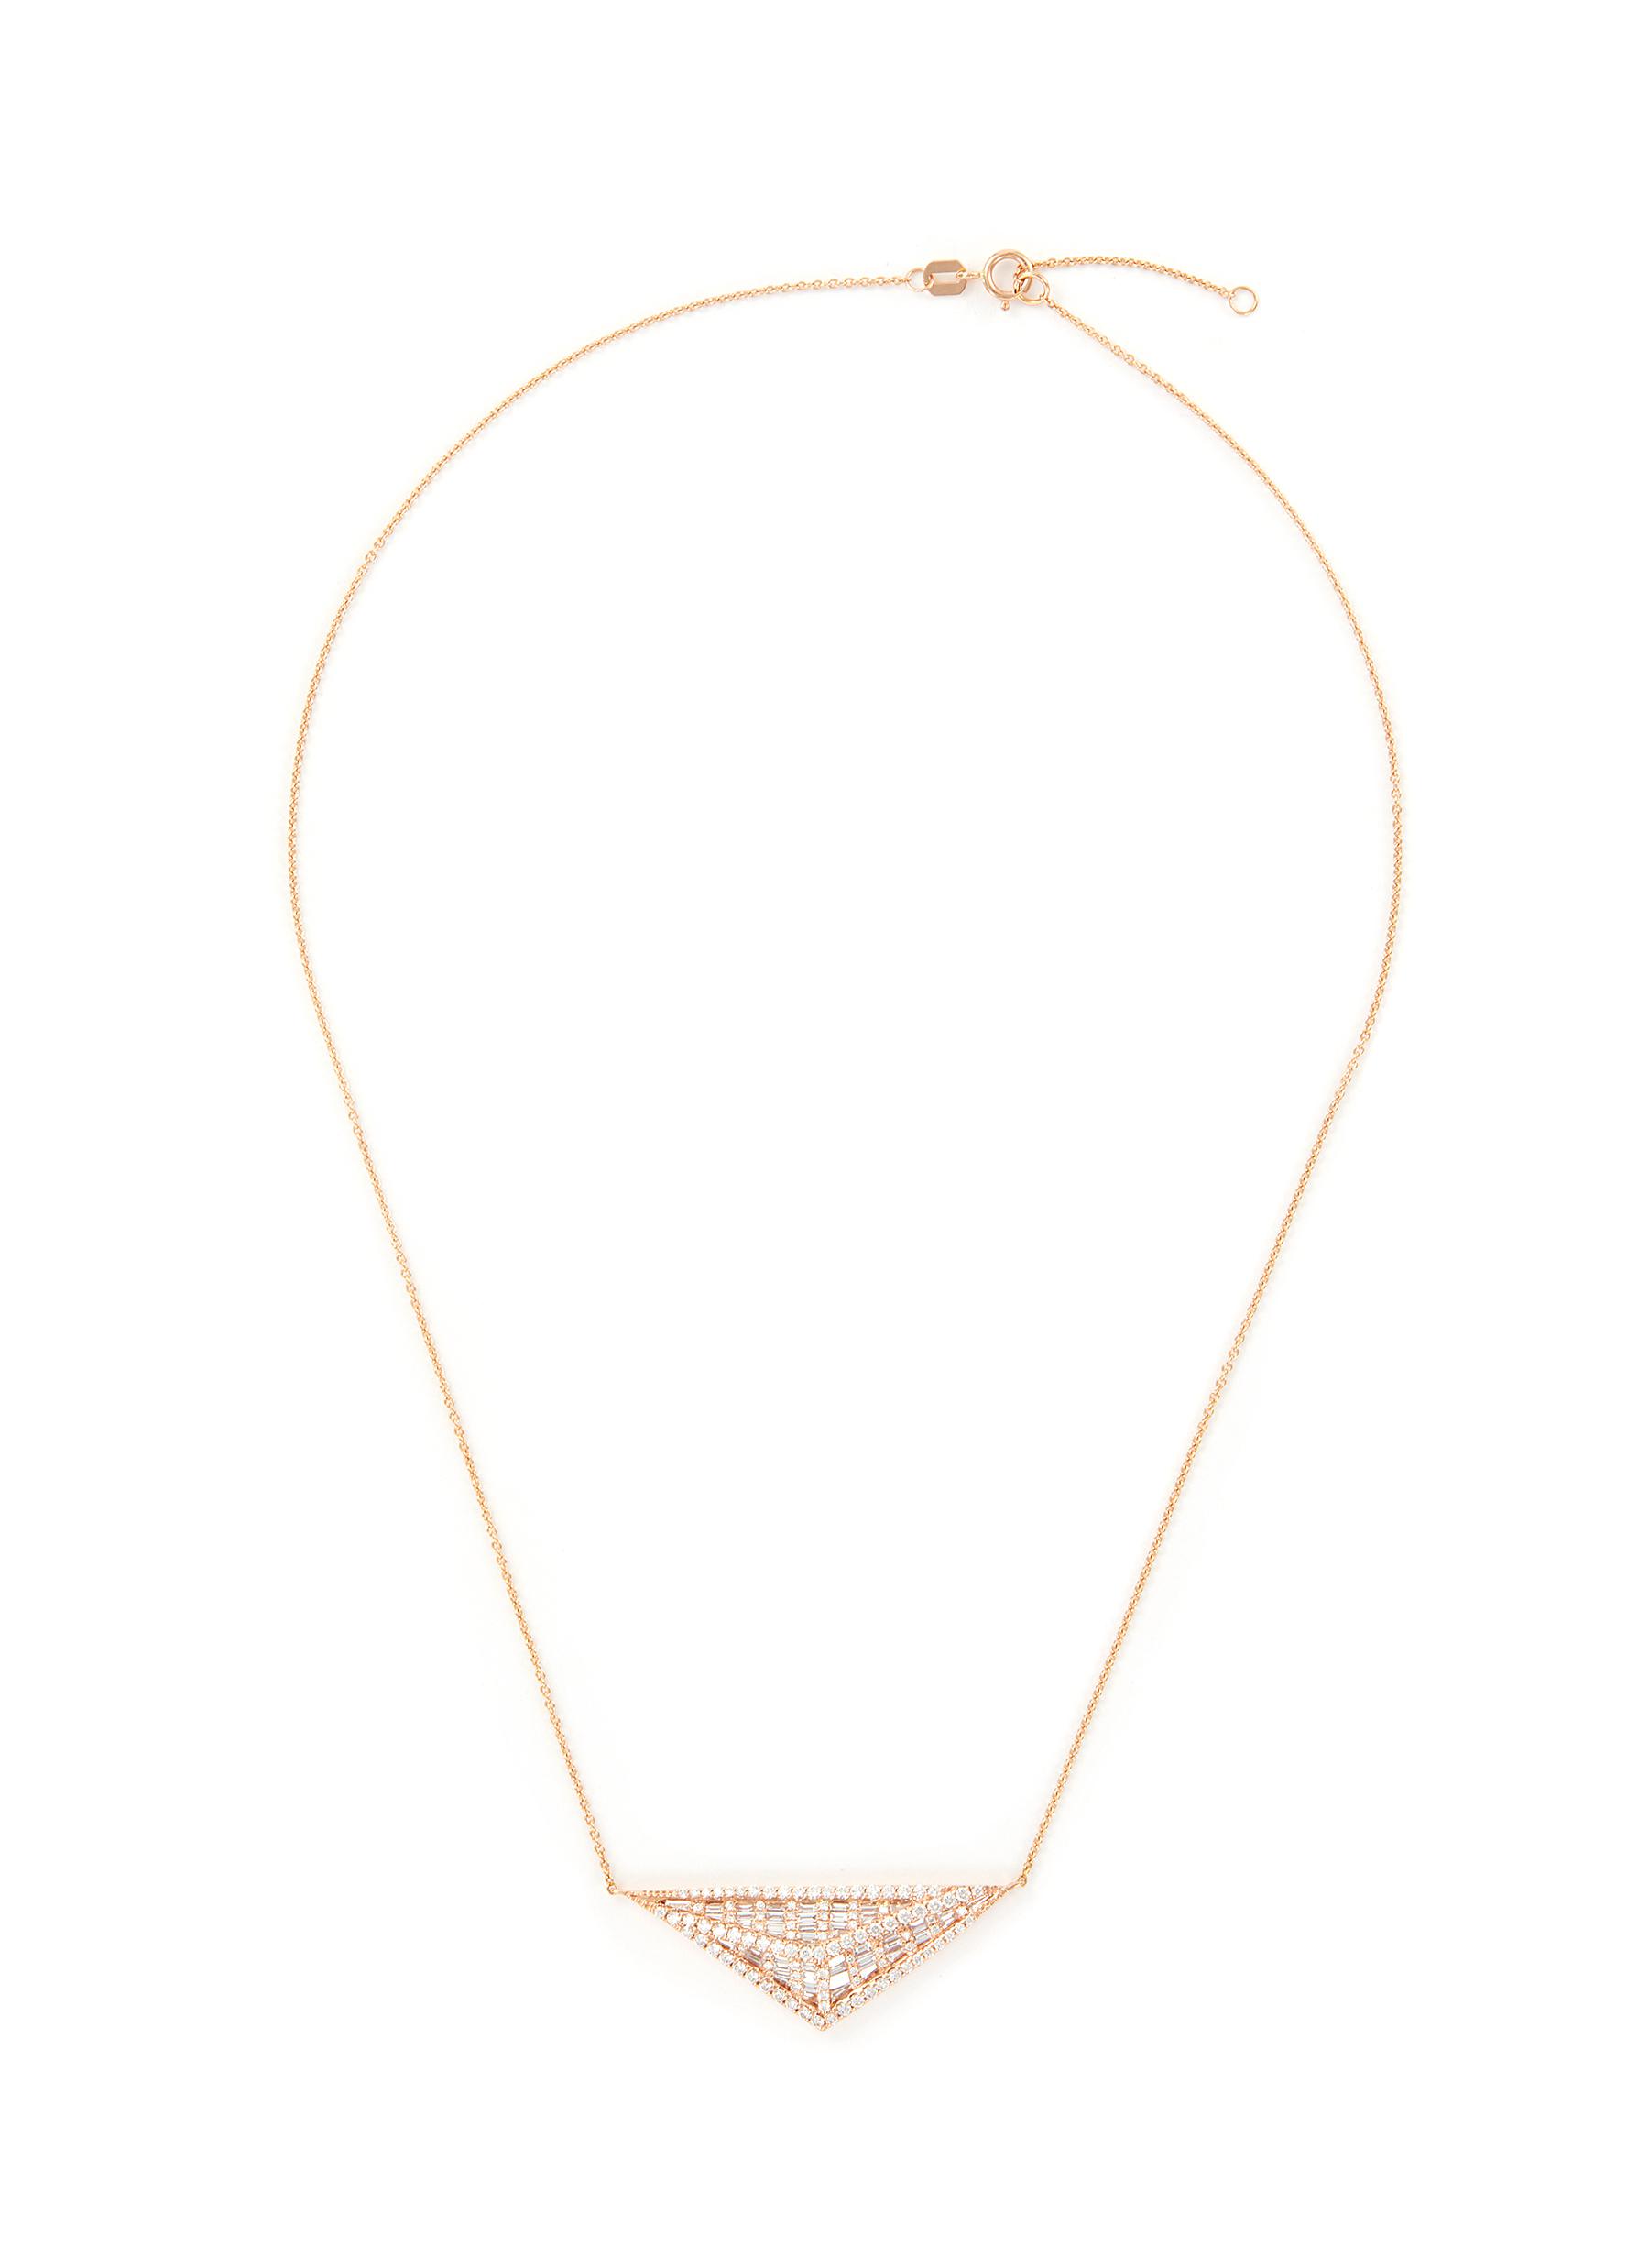 KAVANT & SHARART ‘Origami' Diamond 18K Rose Gold Necklace